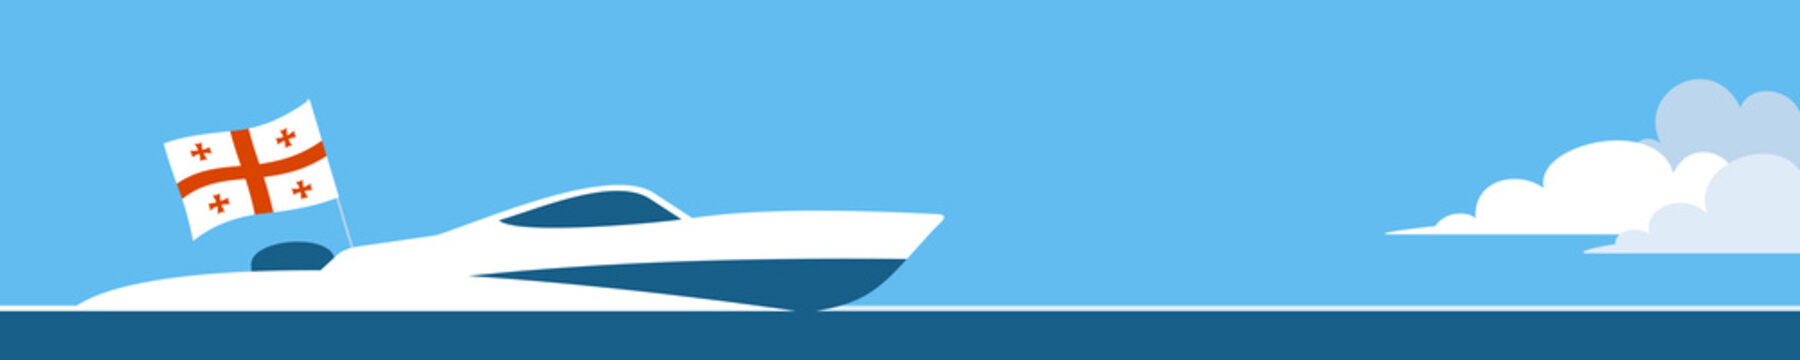 Motor boat with georgia flag